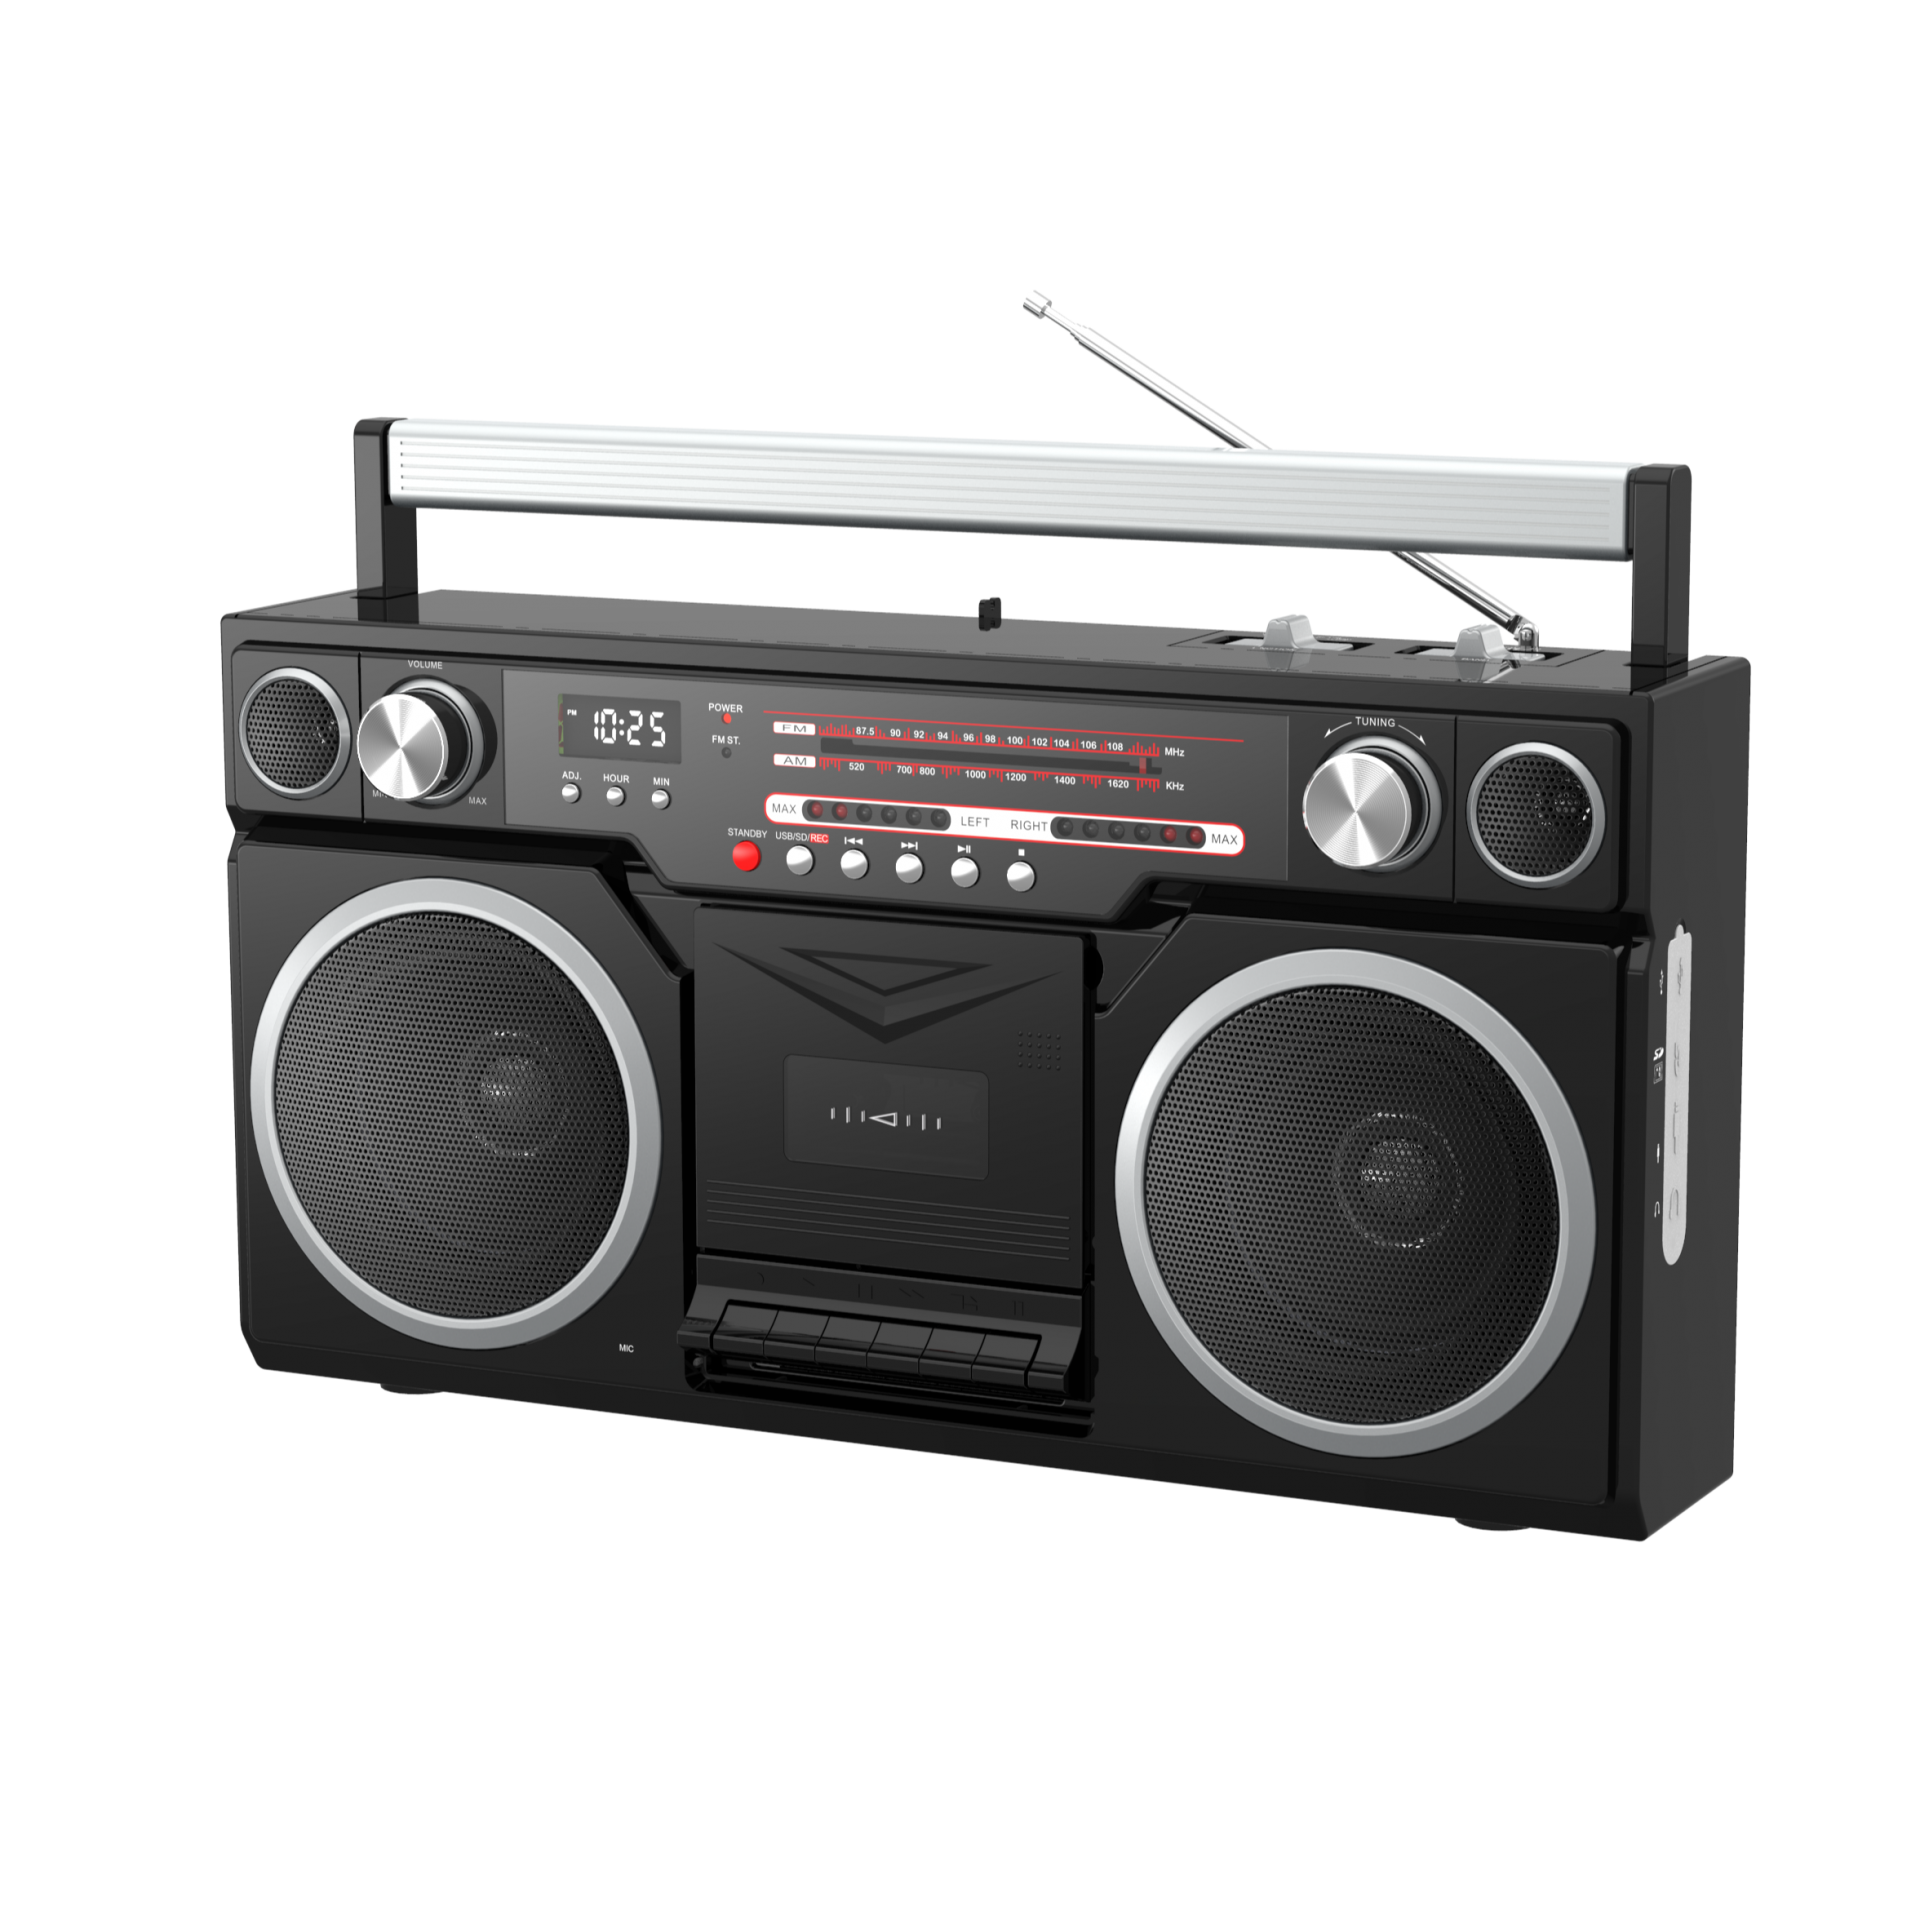 Portable Cassette Radio player